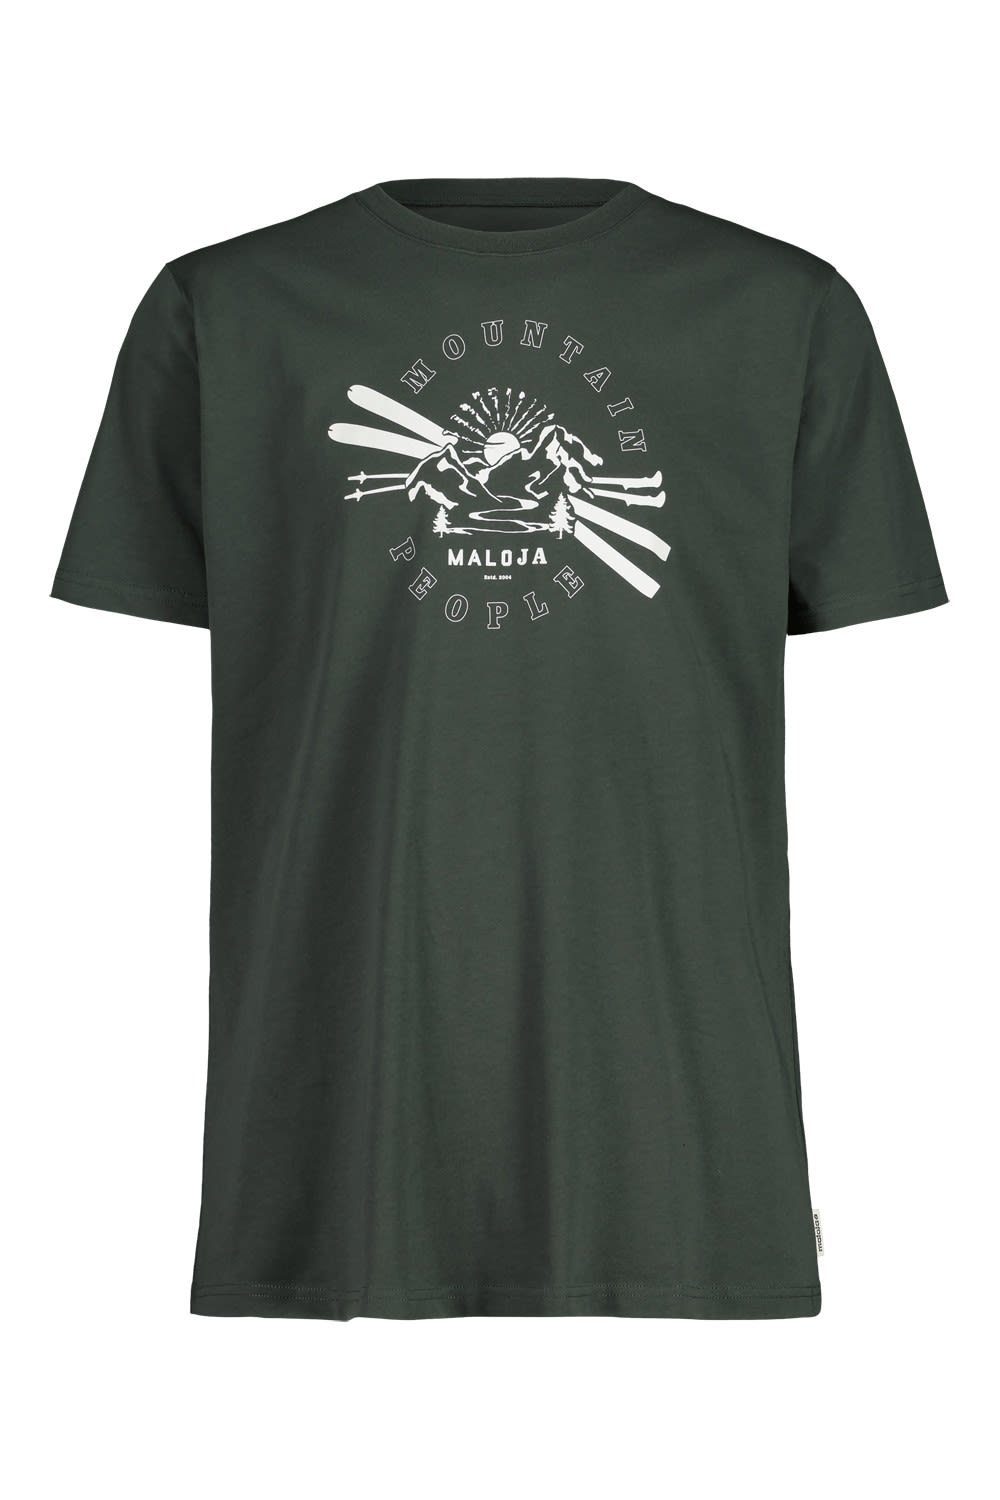 Maloja T-Shirt Maloja M Patteriolm. T-shirt Herren Kurzarm-Shirt Green